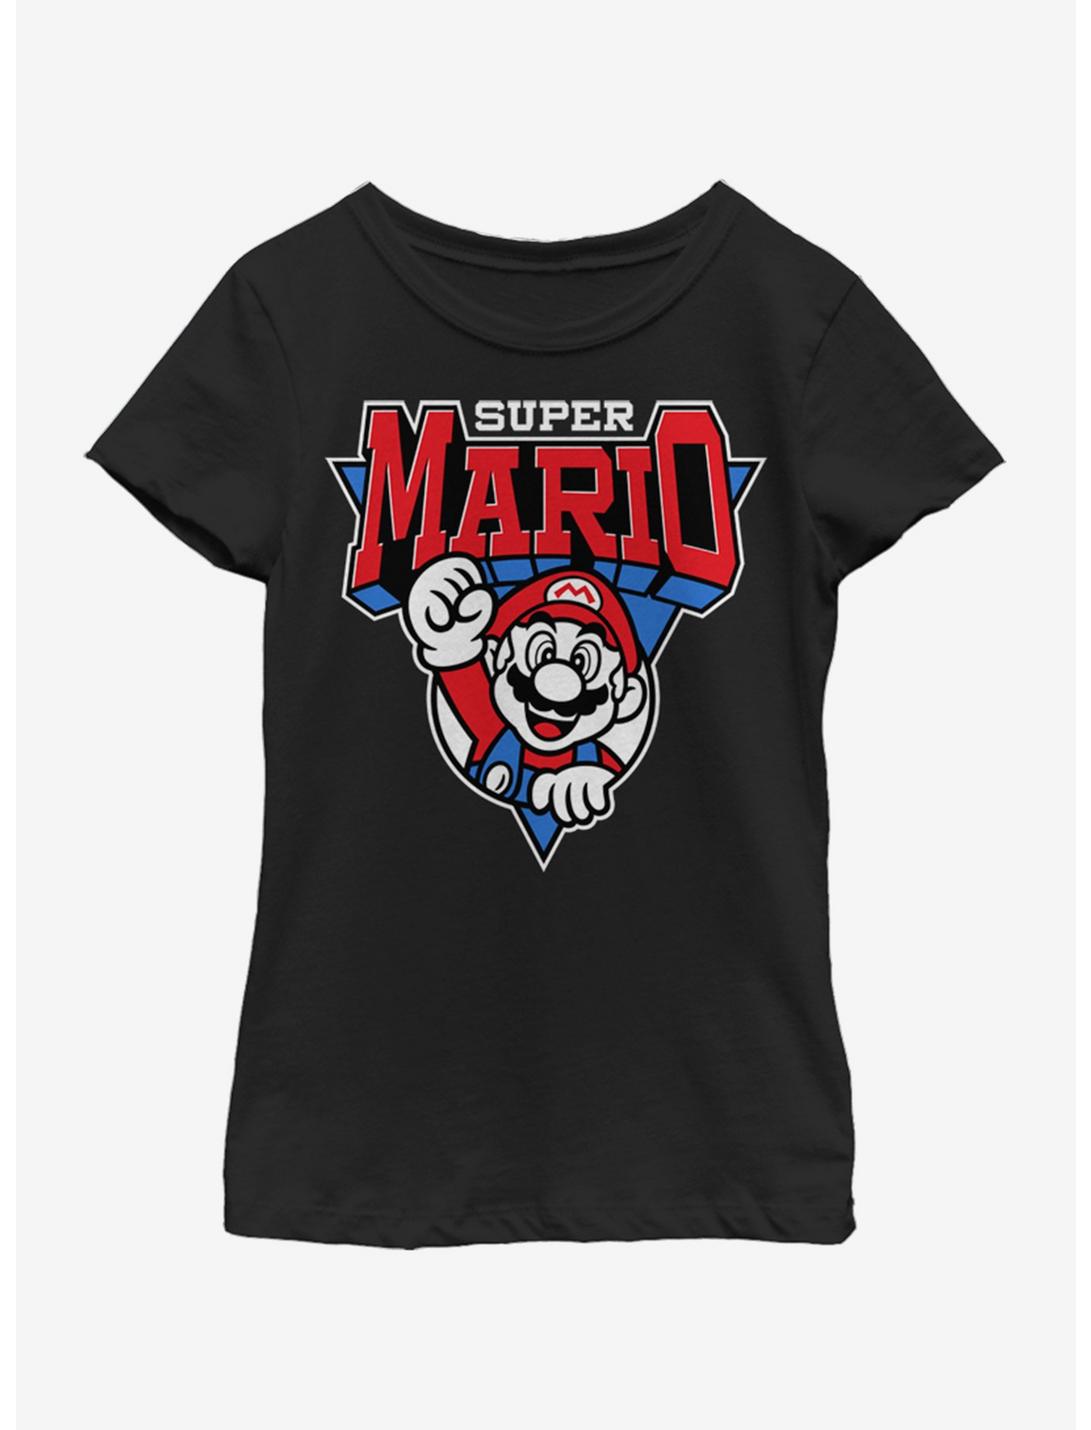 Nintendo Super Mario Team Mario Youth Girls T-Shirt, BLACK, hi-res